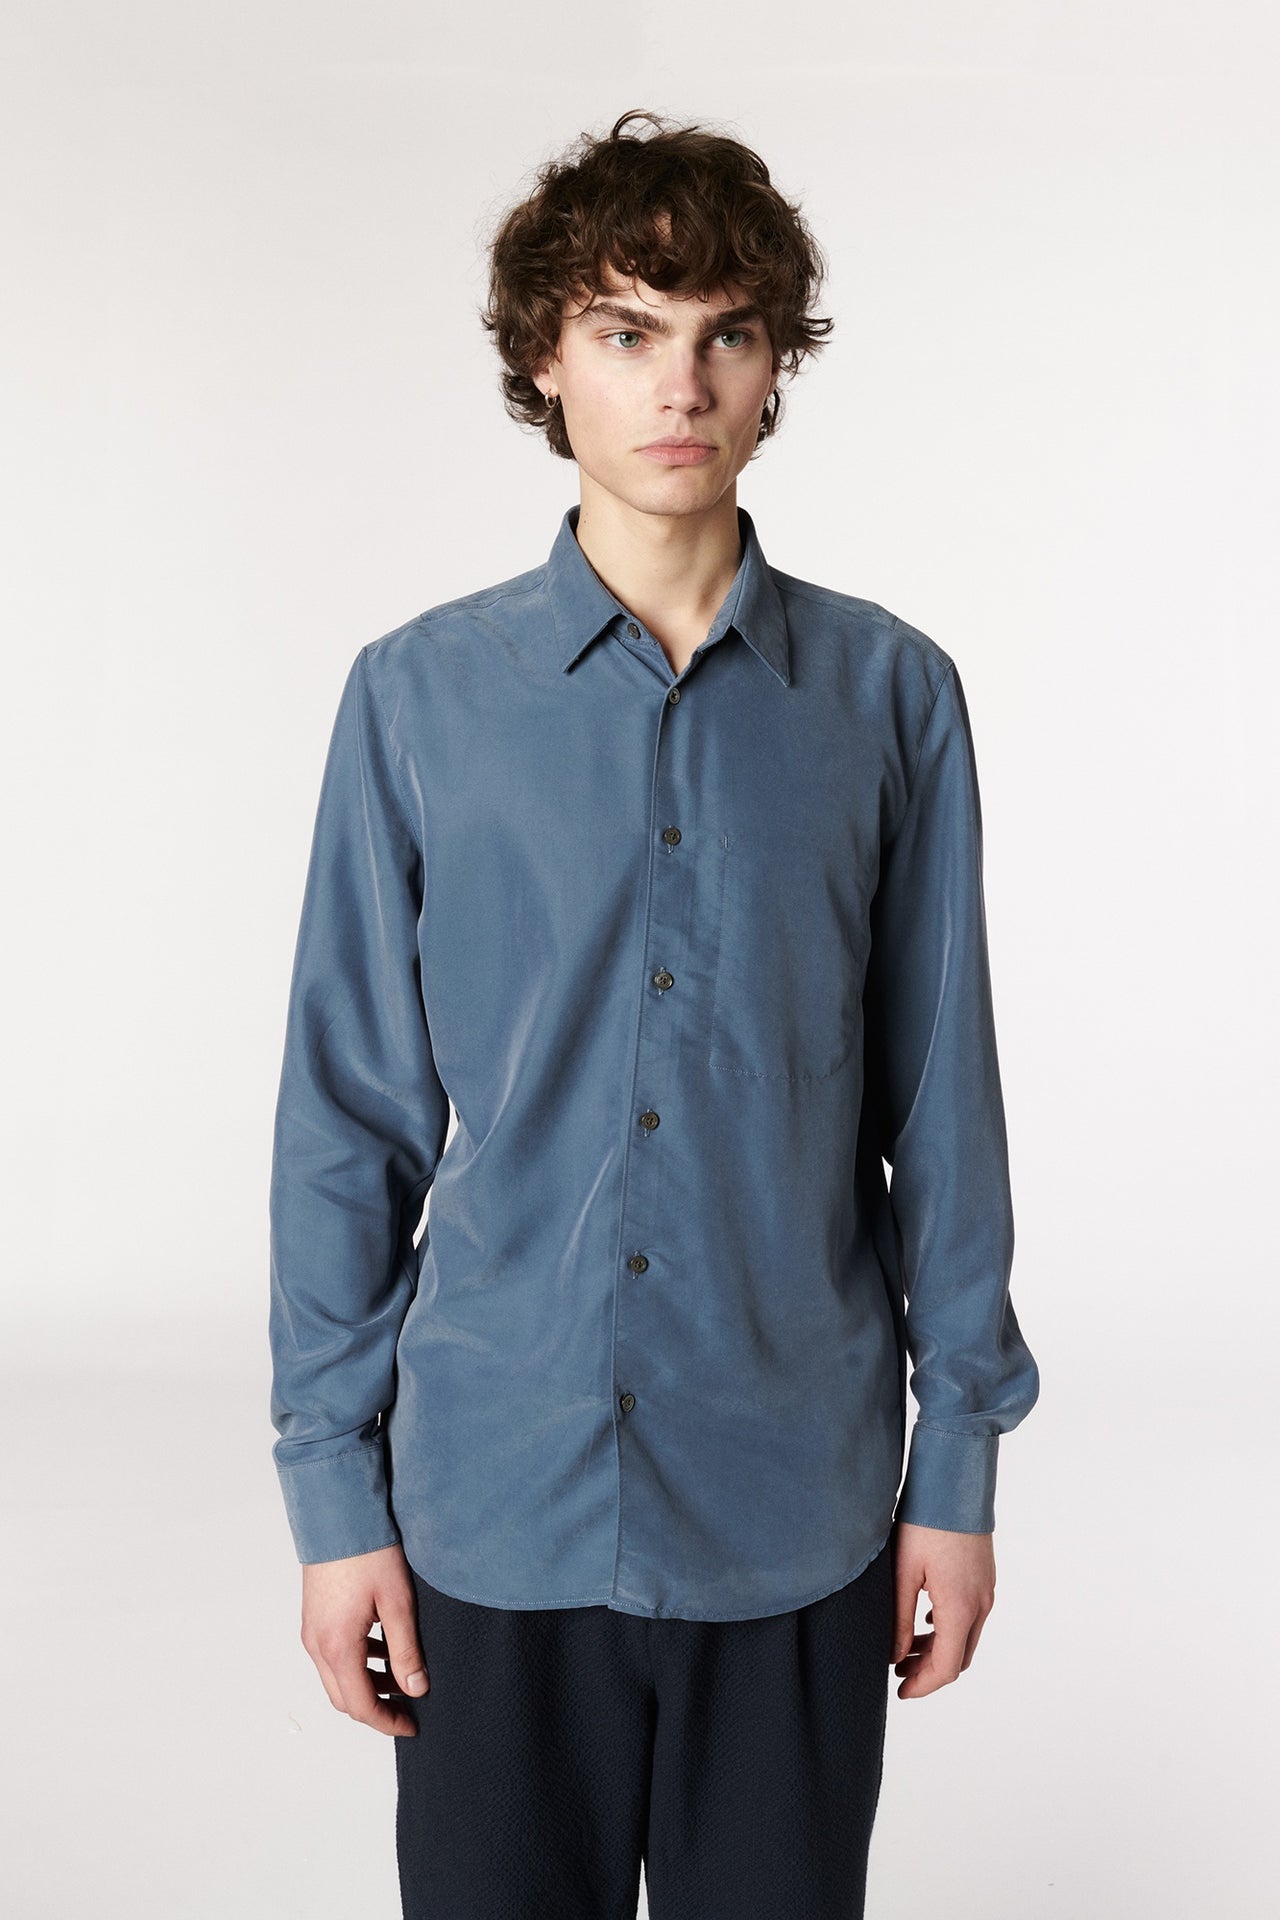 Feel Good Shirt in a Grey Metal Blue Silky Dense Japanese Lyocell